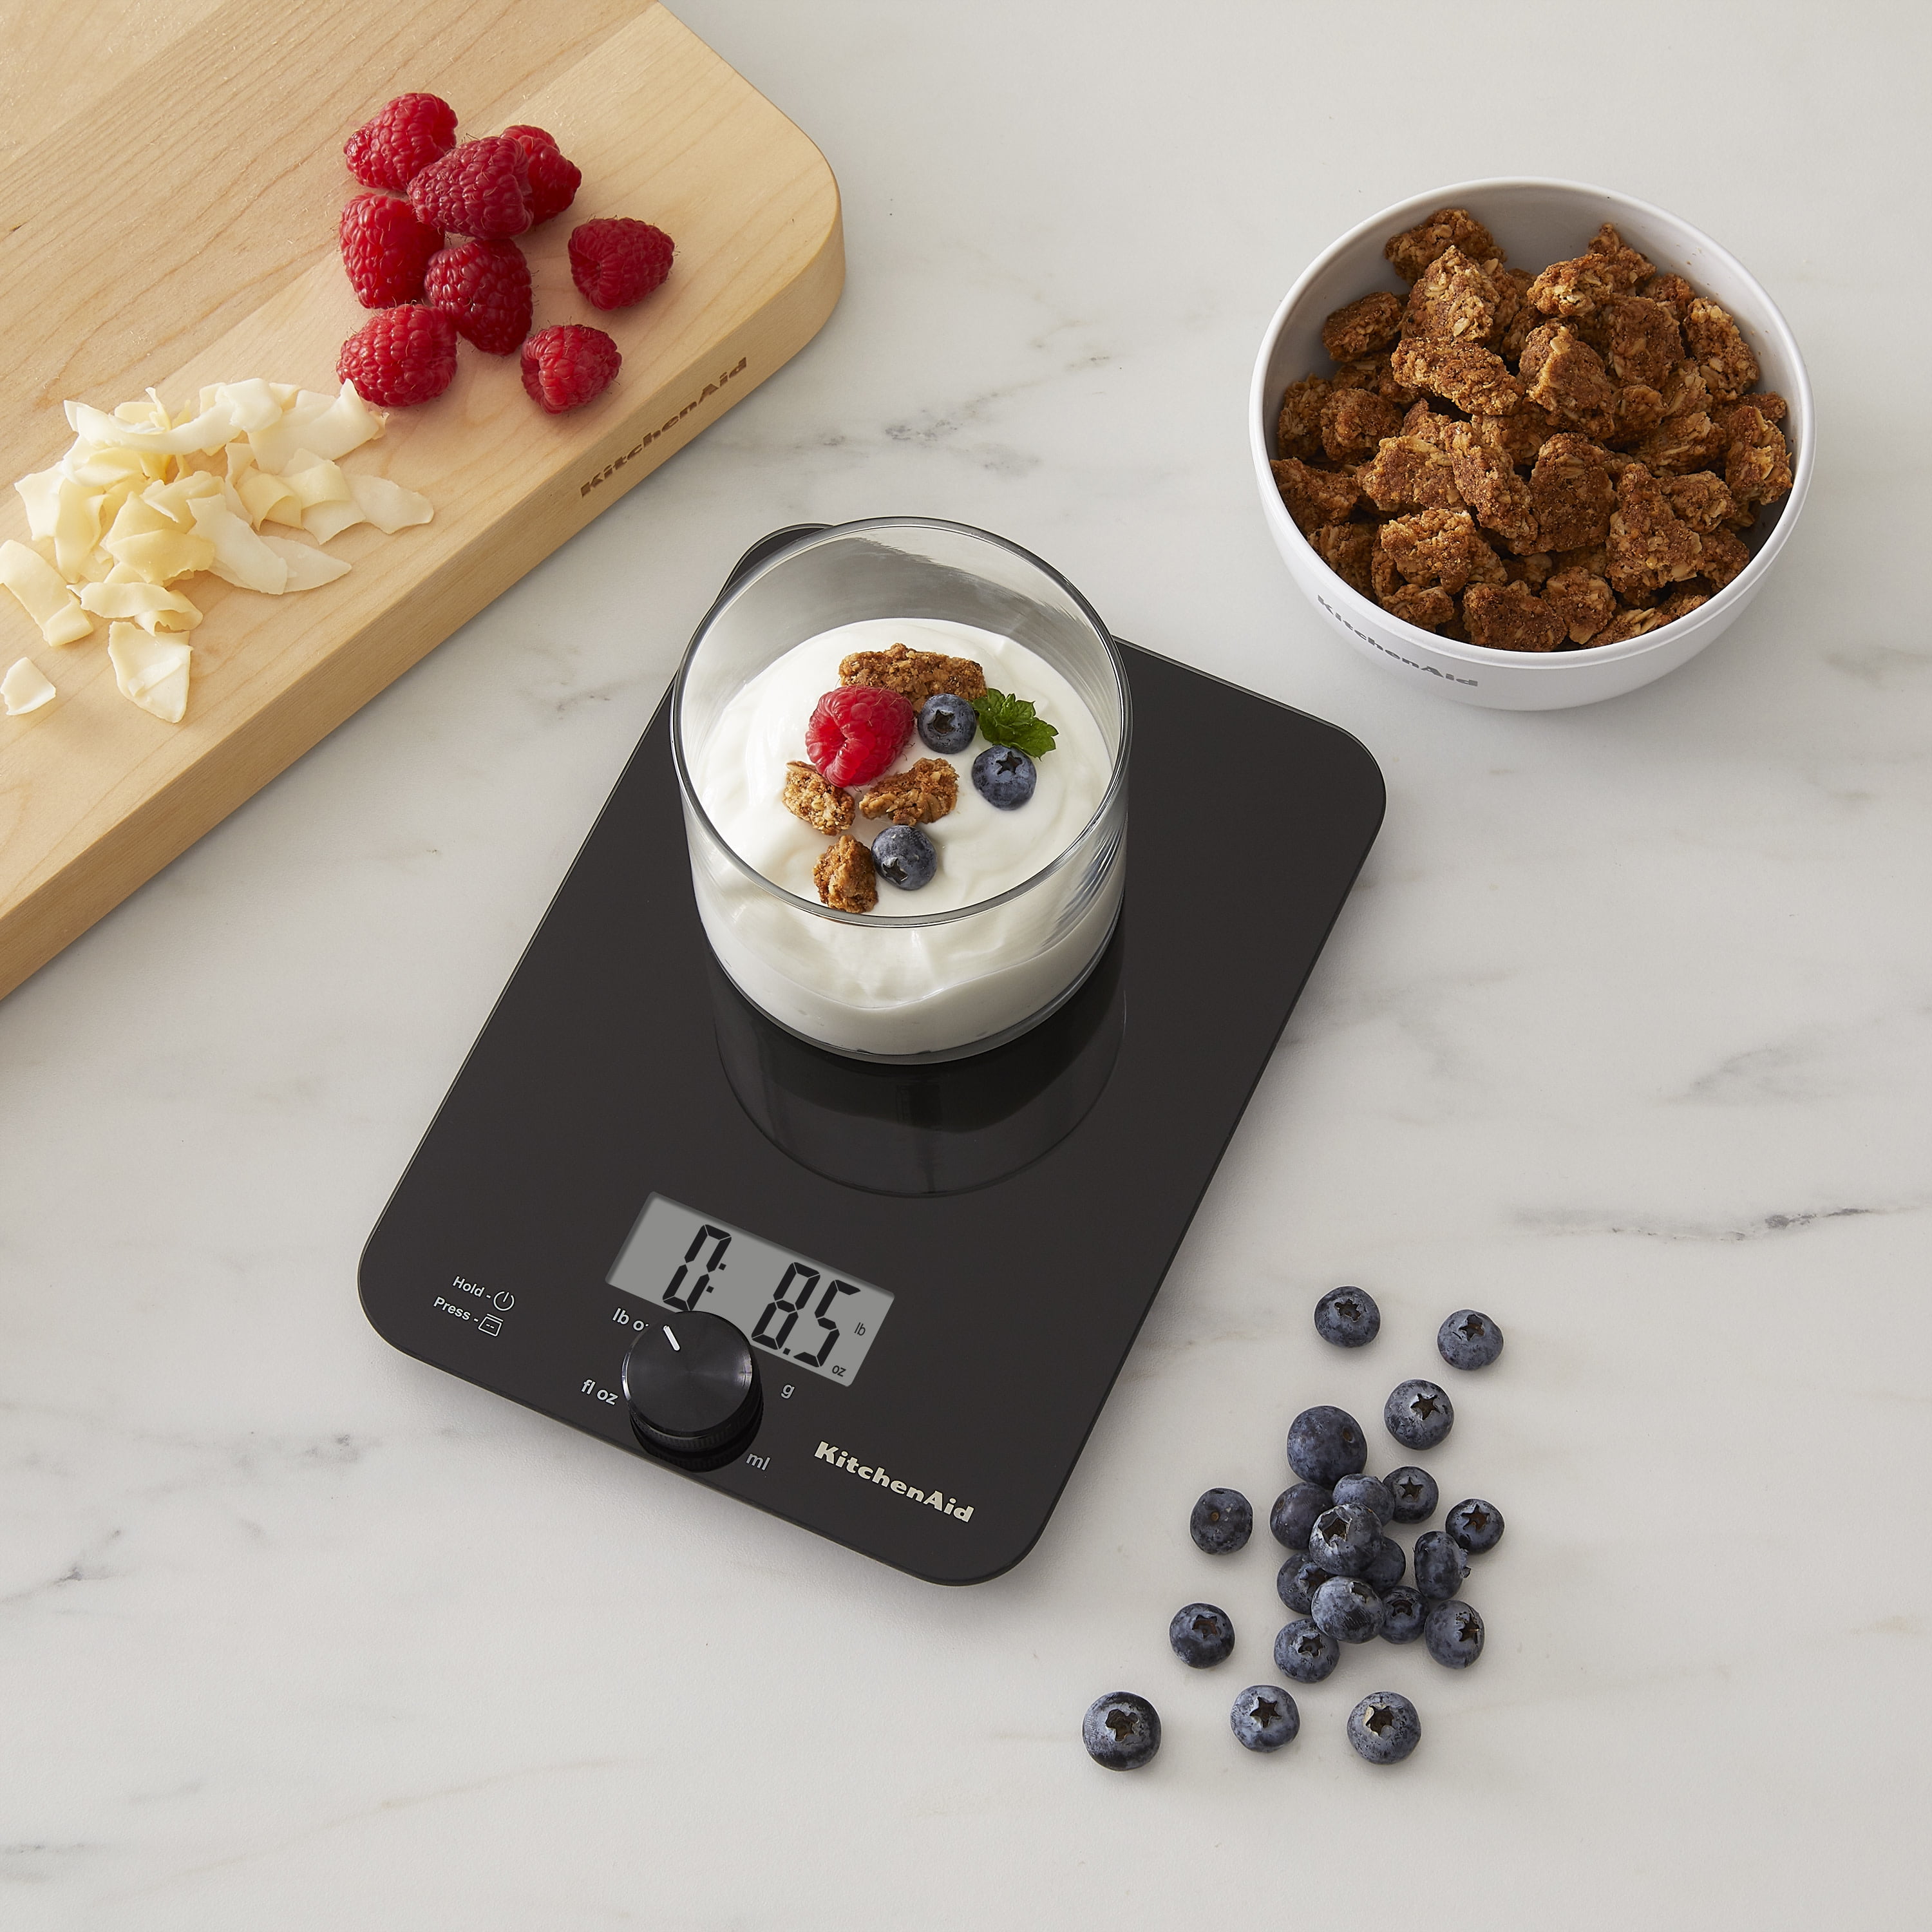 KitchenAid Digital Kitchen Food Scale, 11 pound, White